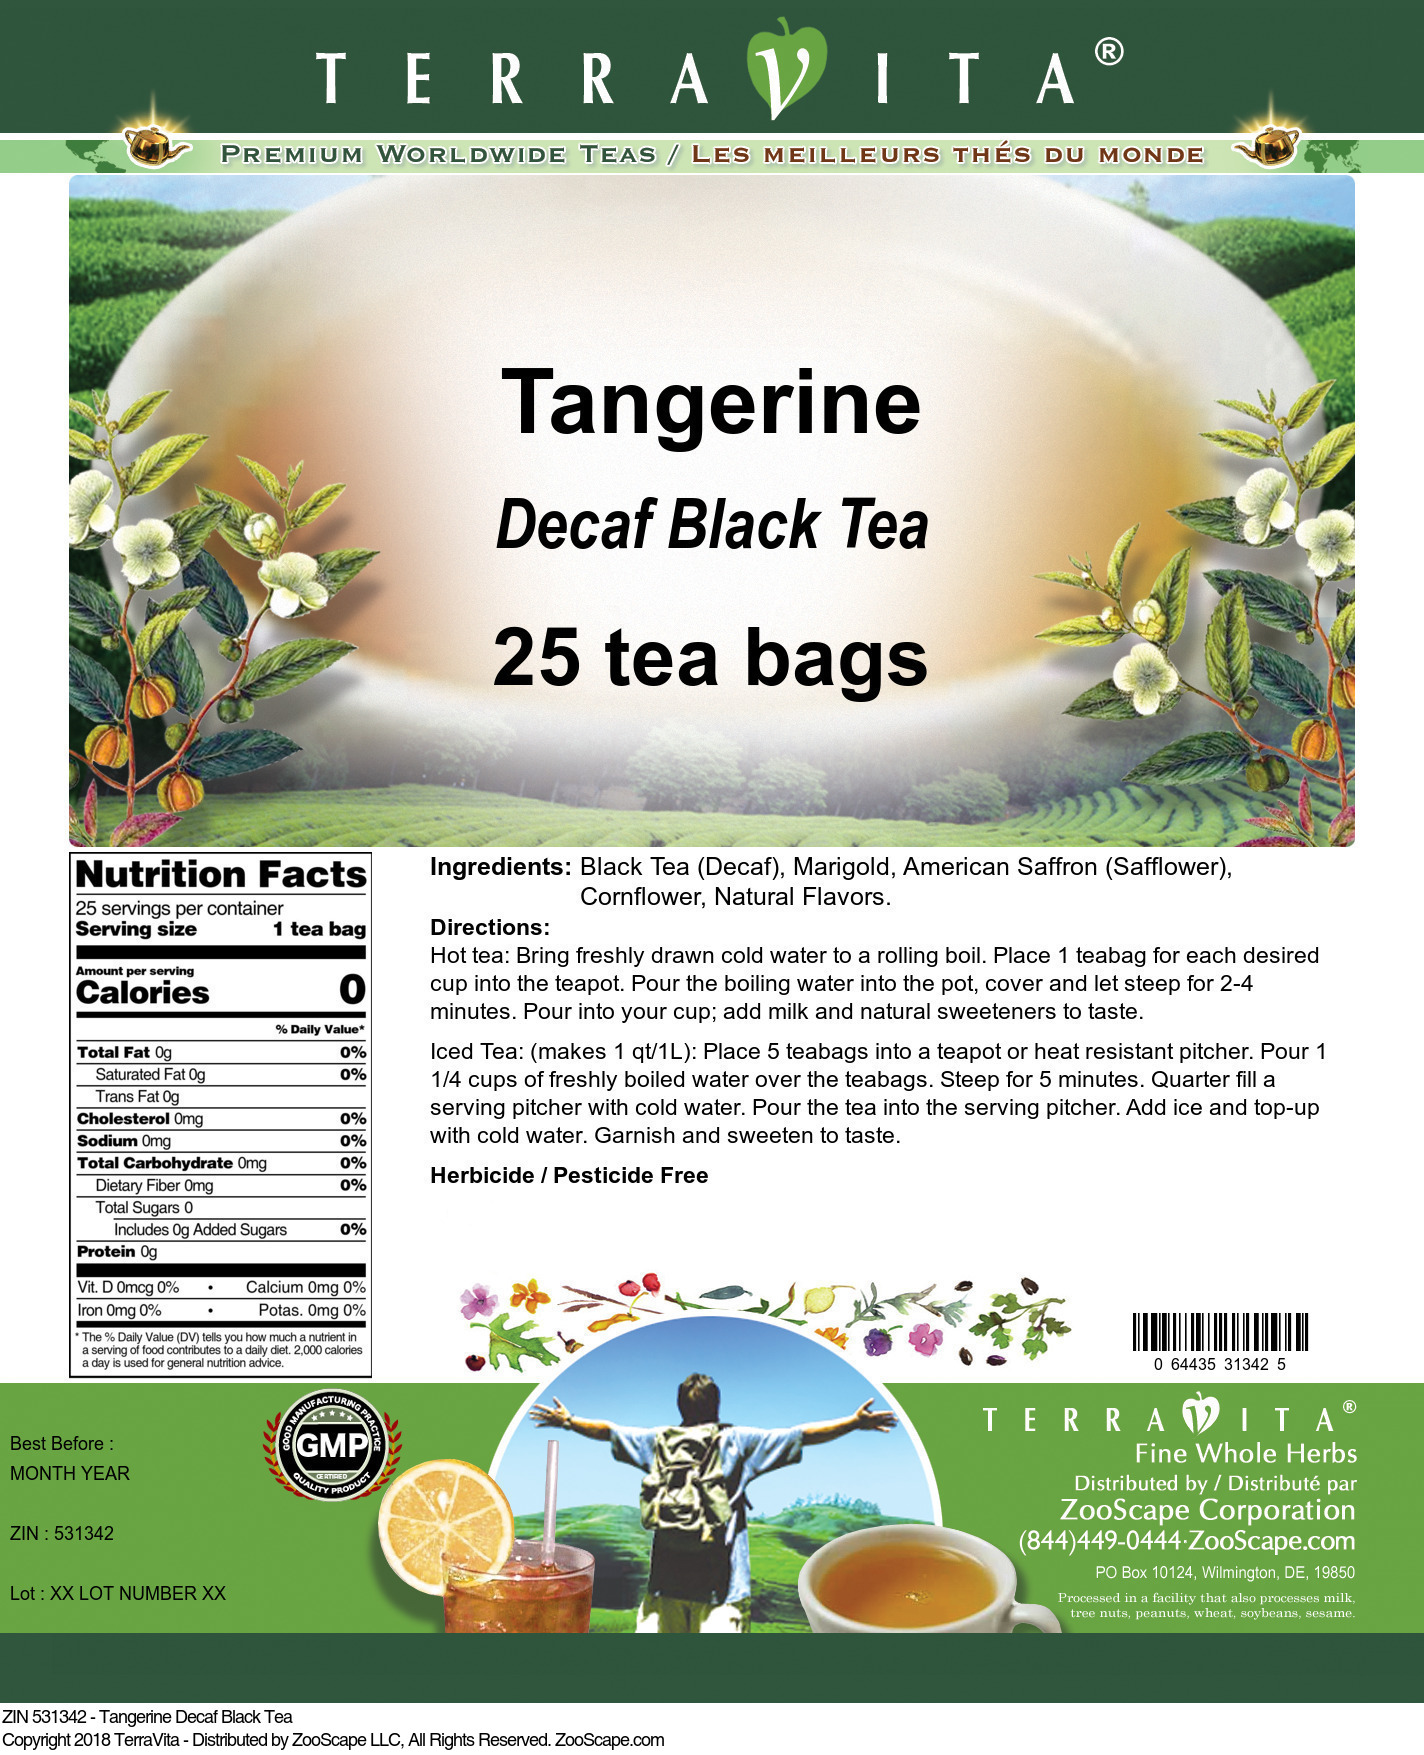 Tangerine Decaf Black Tea - Label